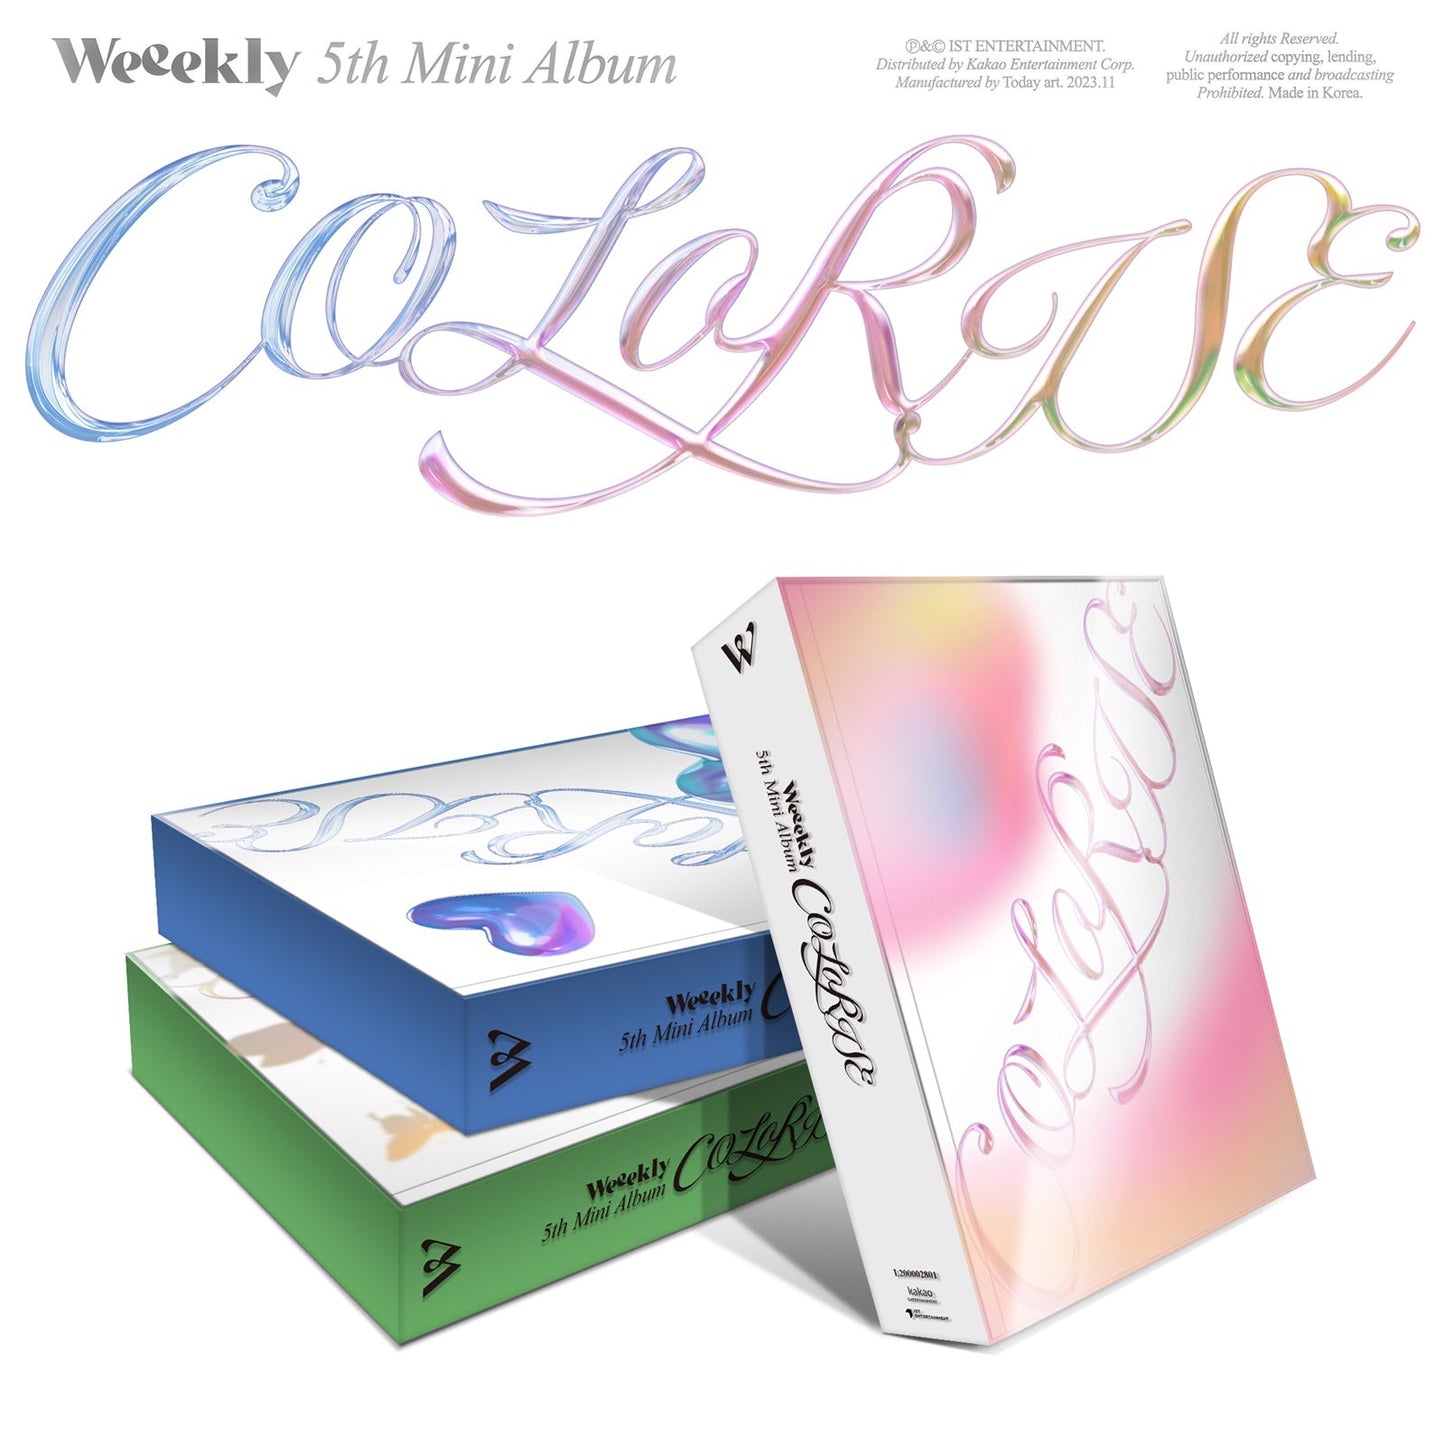 WEEEKLY 5TH MINI ALBUM 'COLORISE' SET COVER